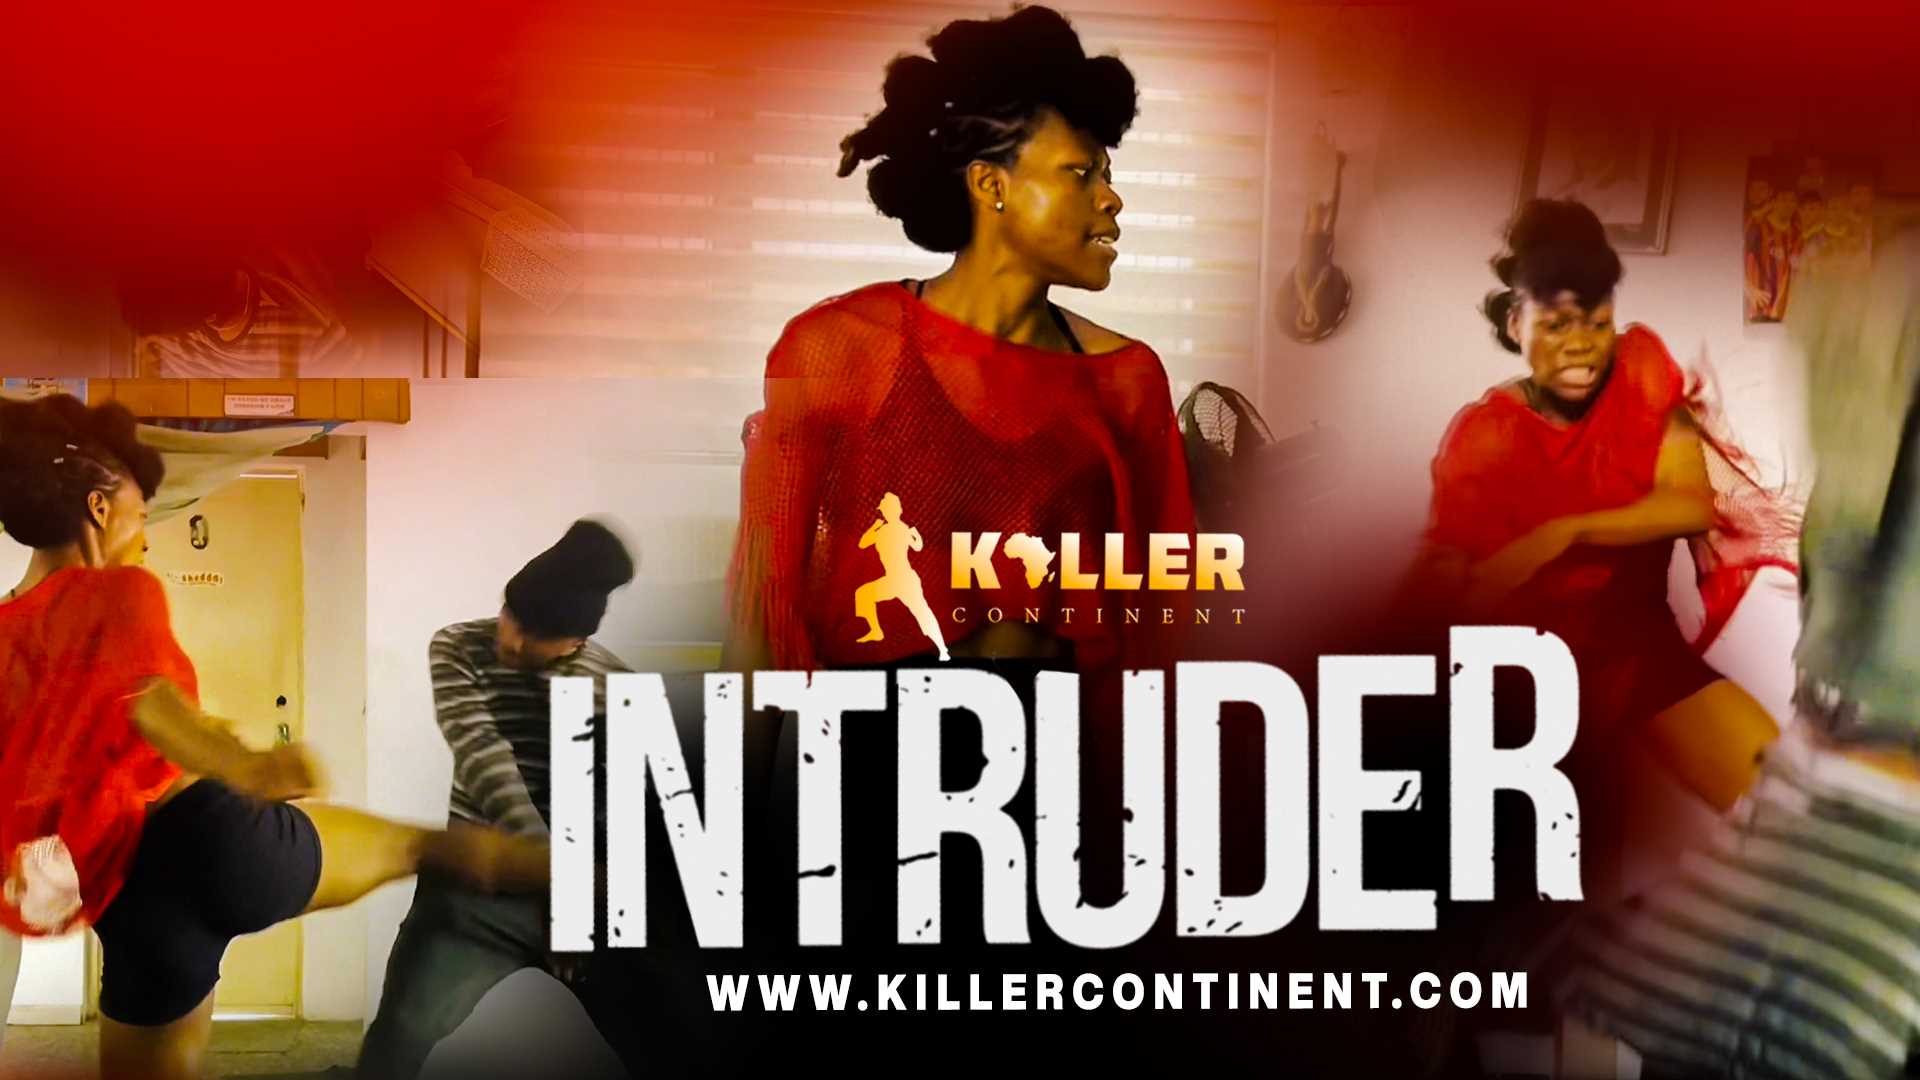 KillerContinent | Killer Continent | INTRUDER